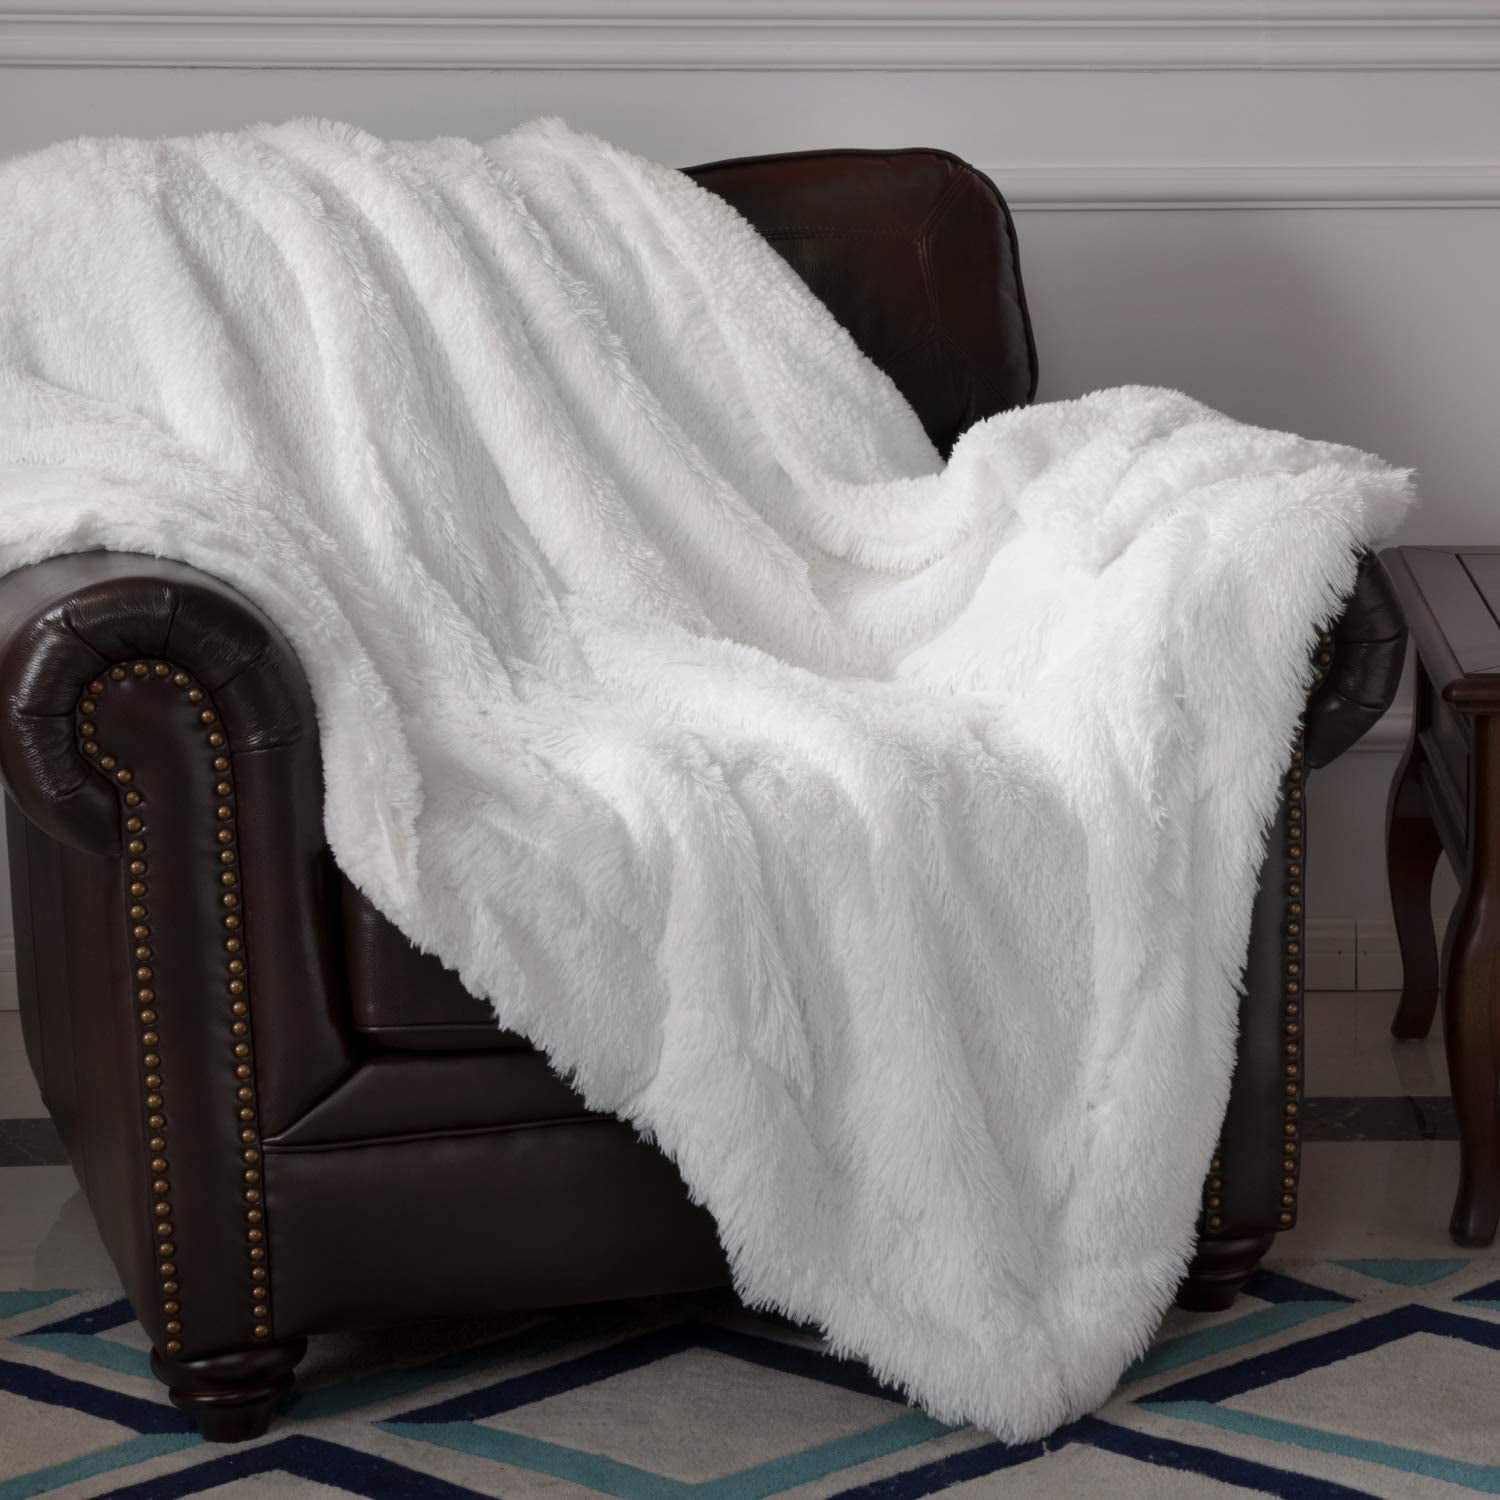 Cozy Fuzzy 49 x 59 Inches Reversible Microfiber Blanket for Bed Sofa Couch Warm Shaggy Patrick's Day Lucky Shamrocks Elf Blackboard Sherpa Fleece Blanket Ultra Soft Throw Blanket Happy St 